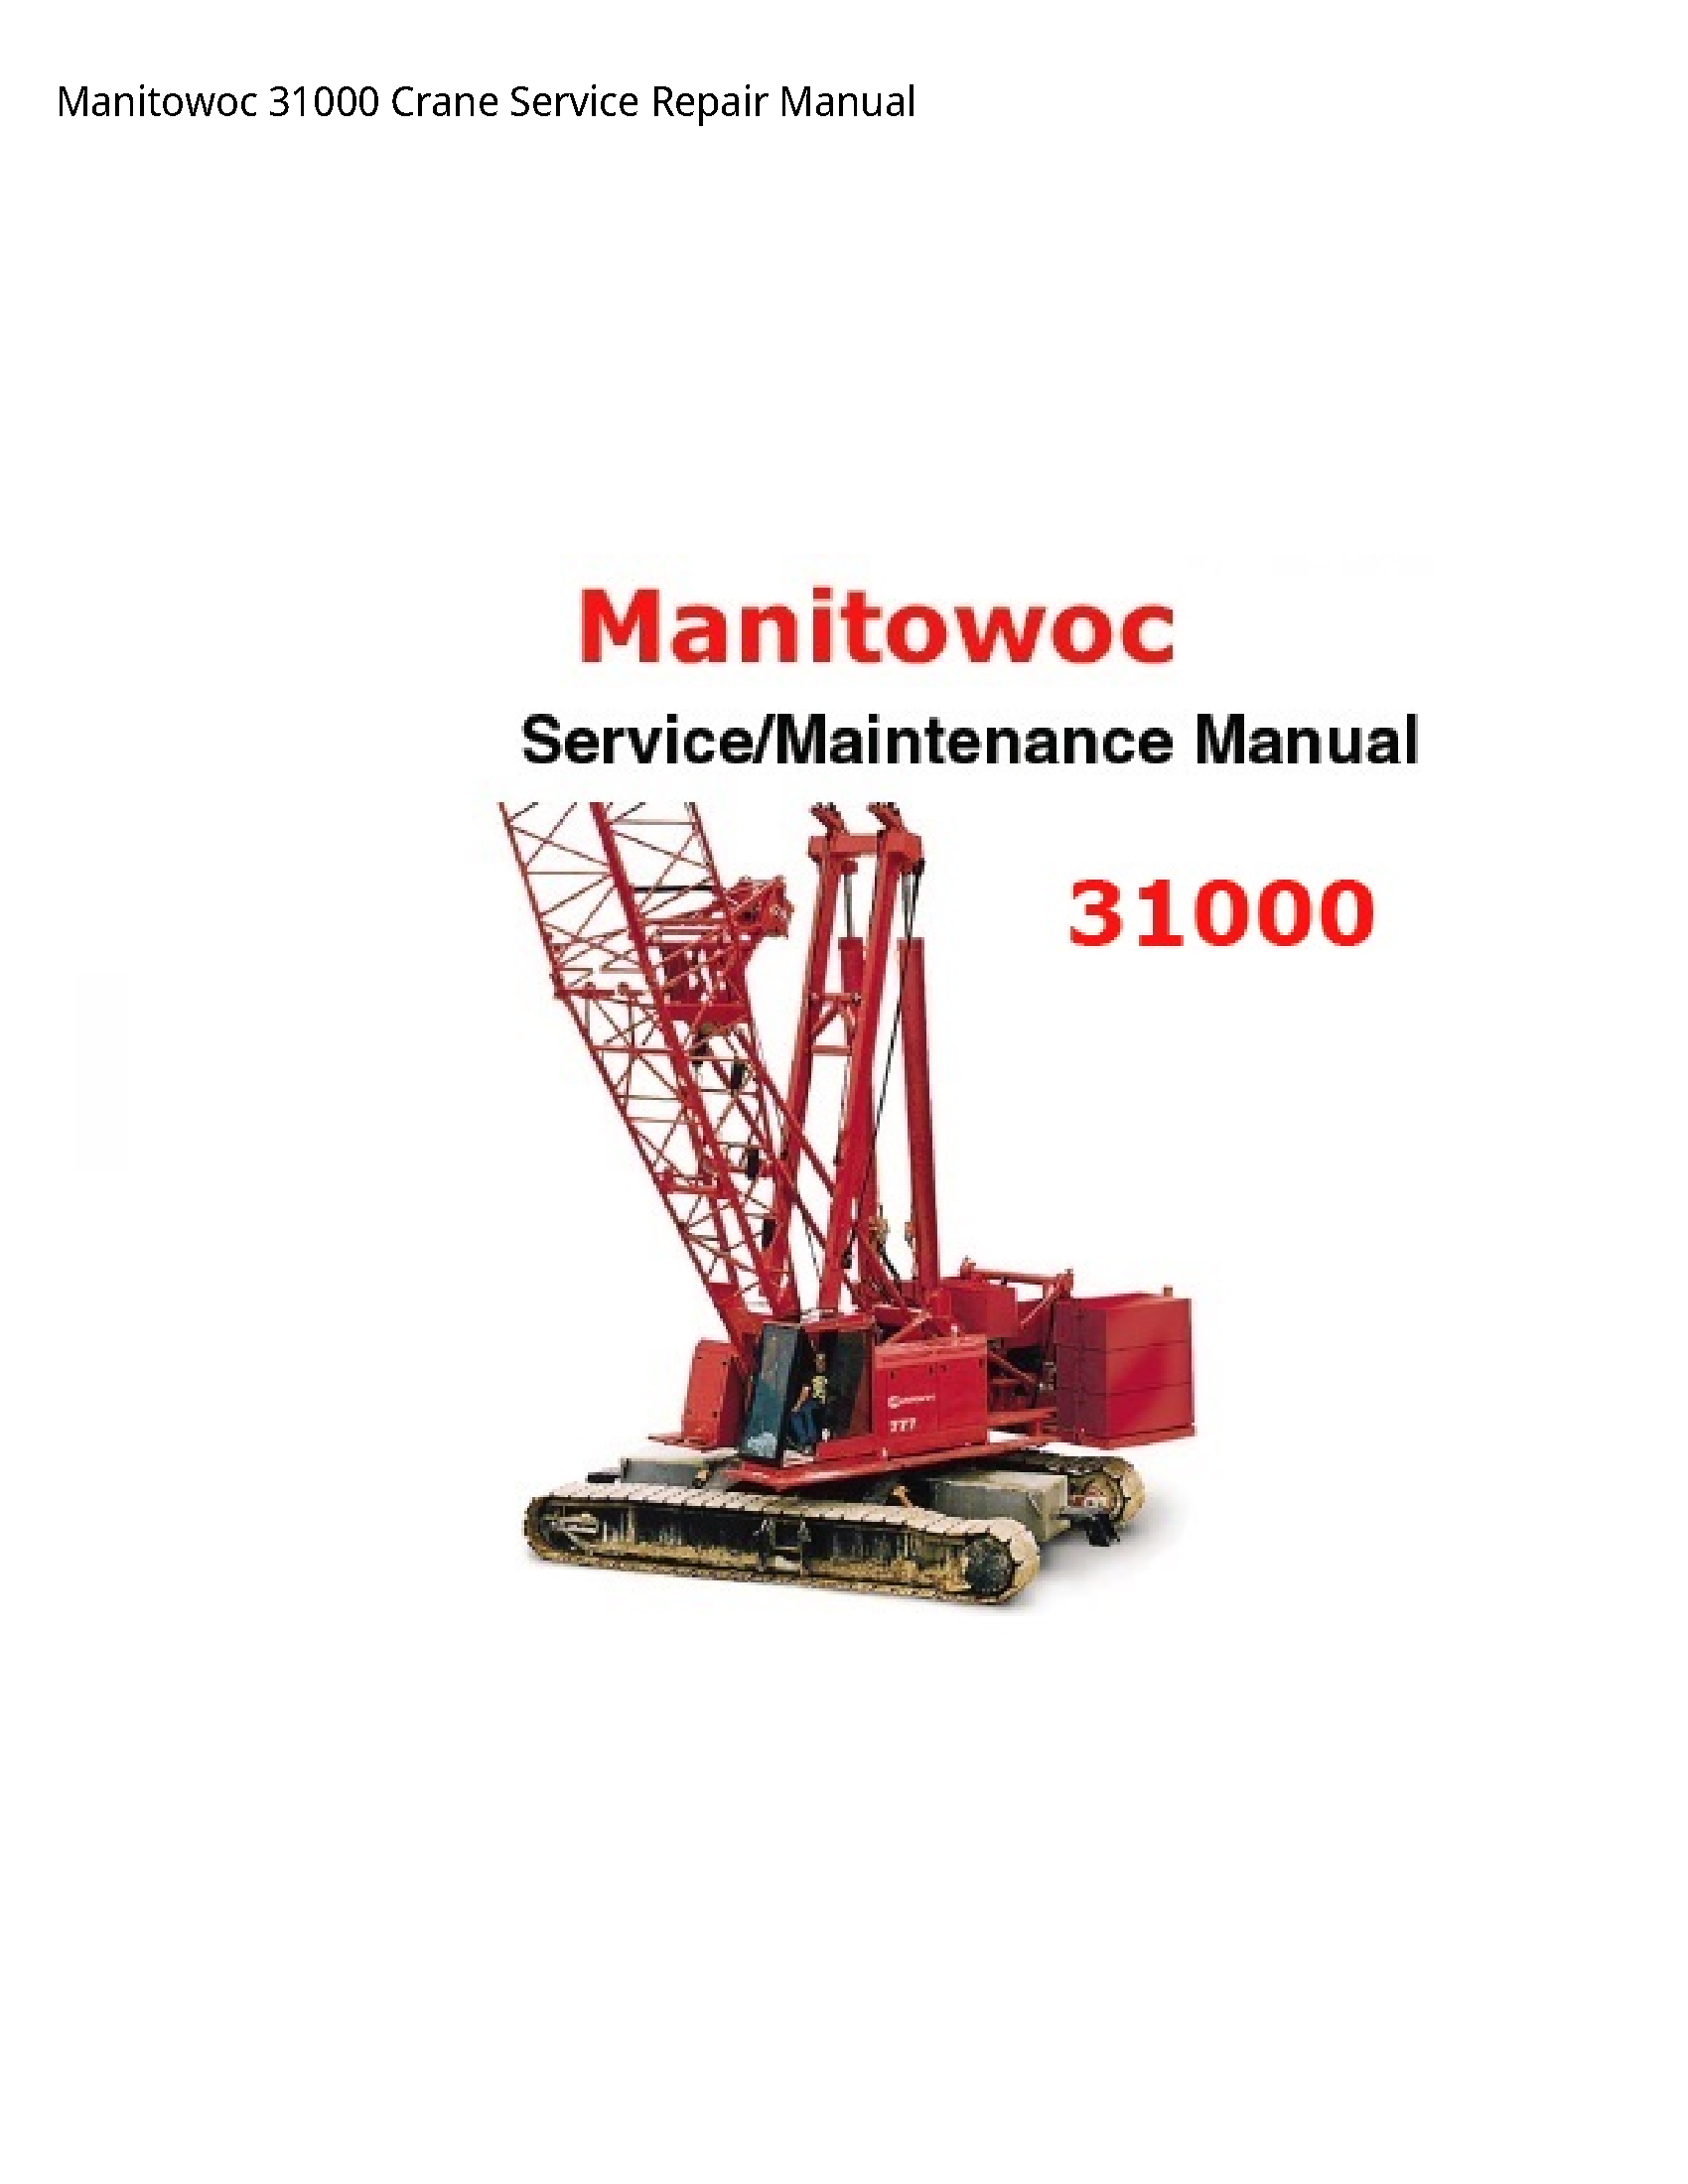 Manitowoc 31000 Crane manual